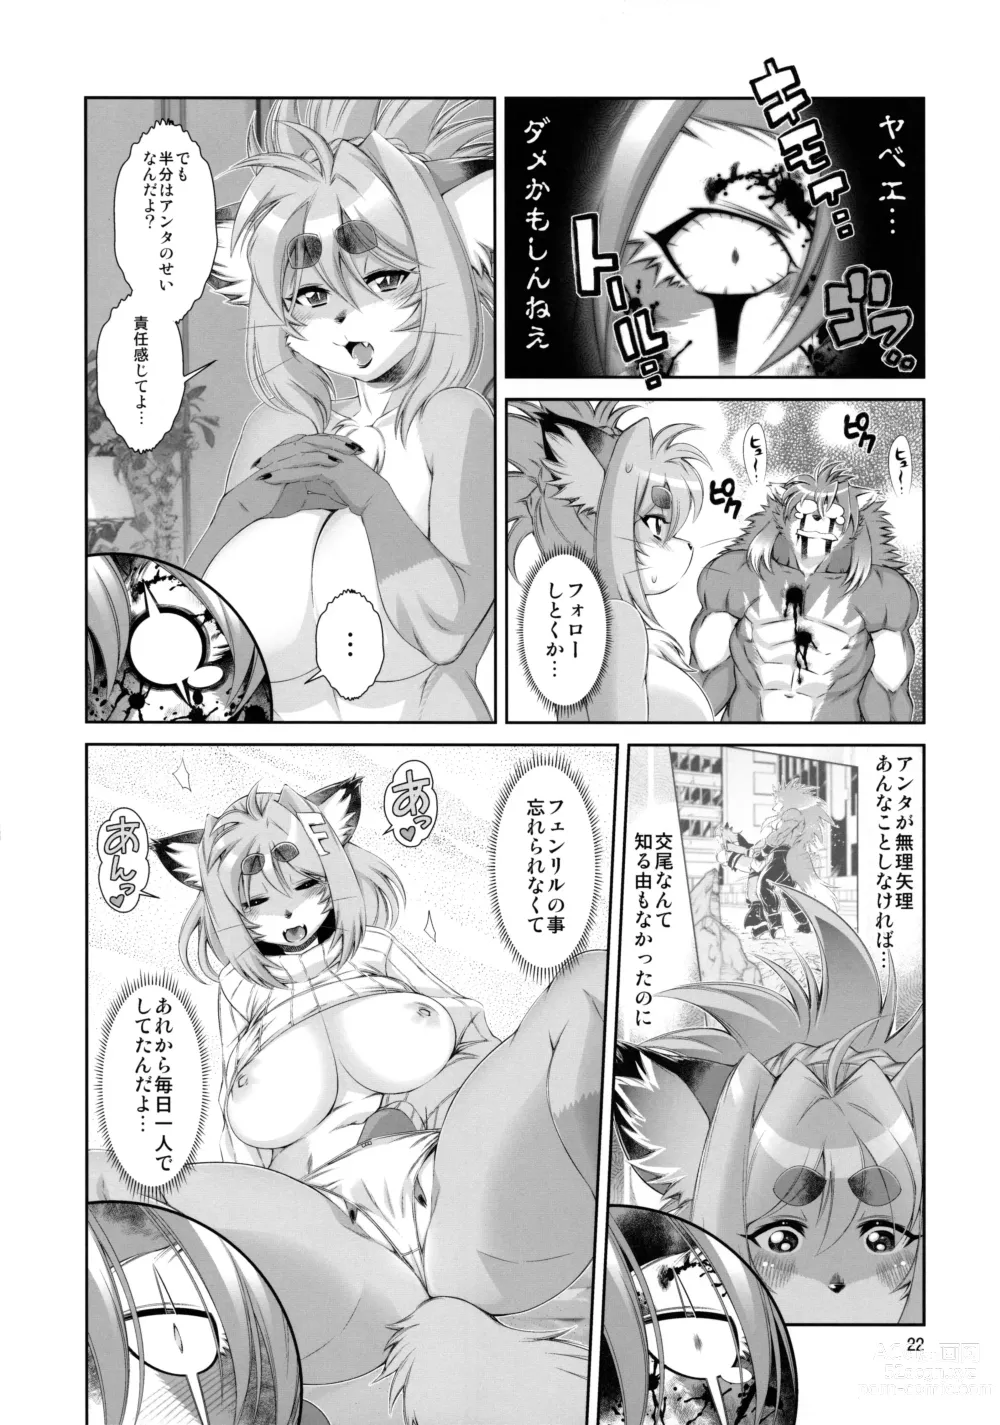 Page 23 of doujinshi Mahou no Juujin Foxy Rena 19